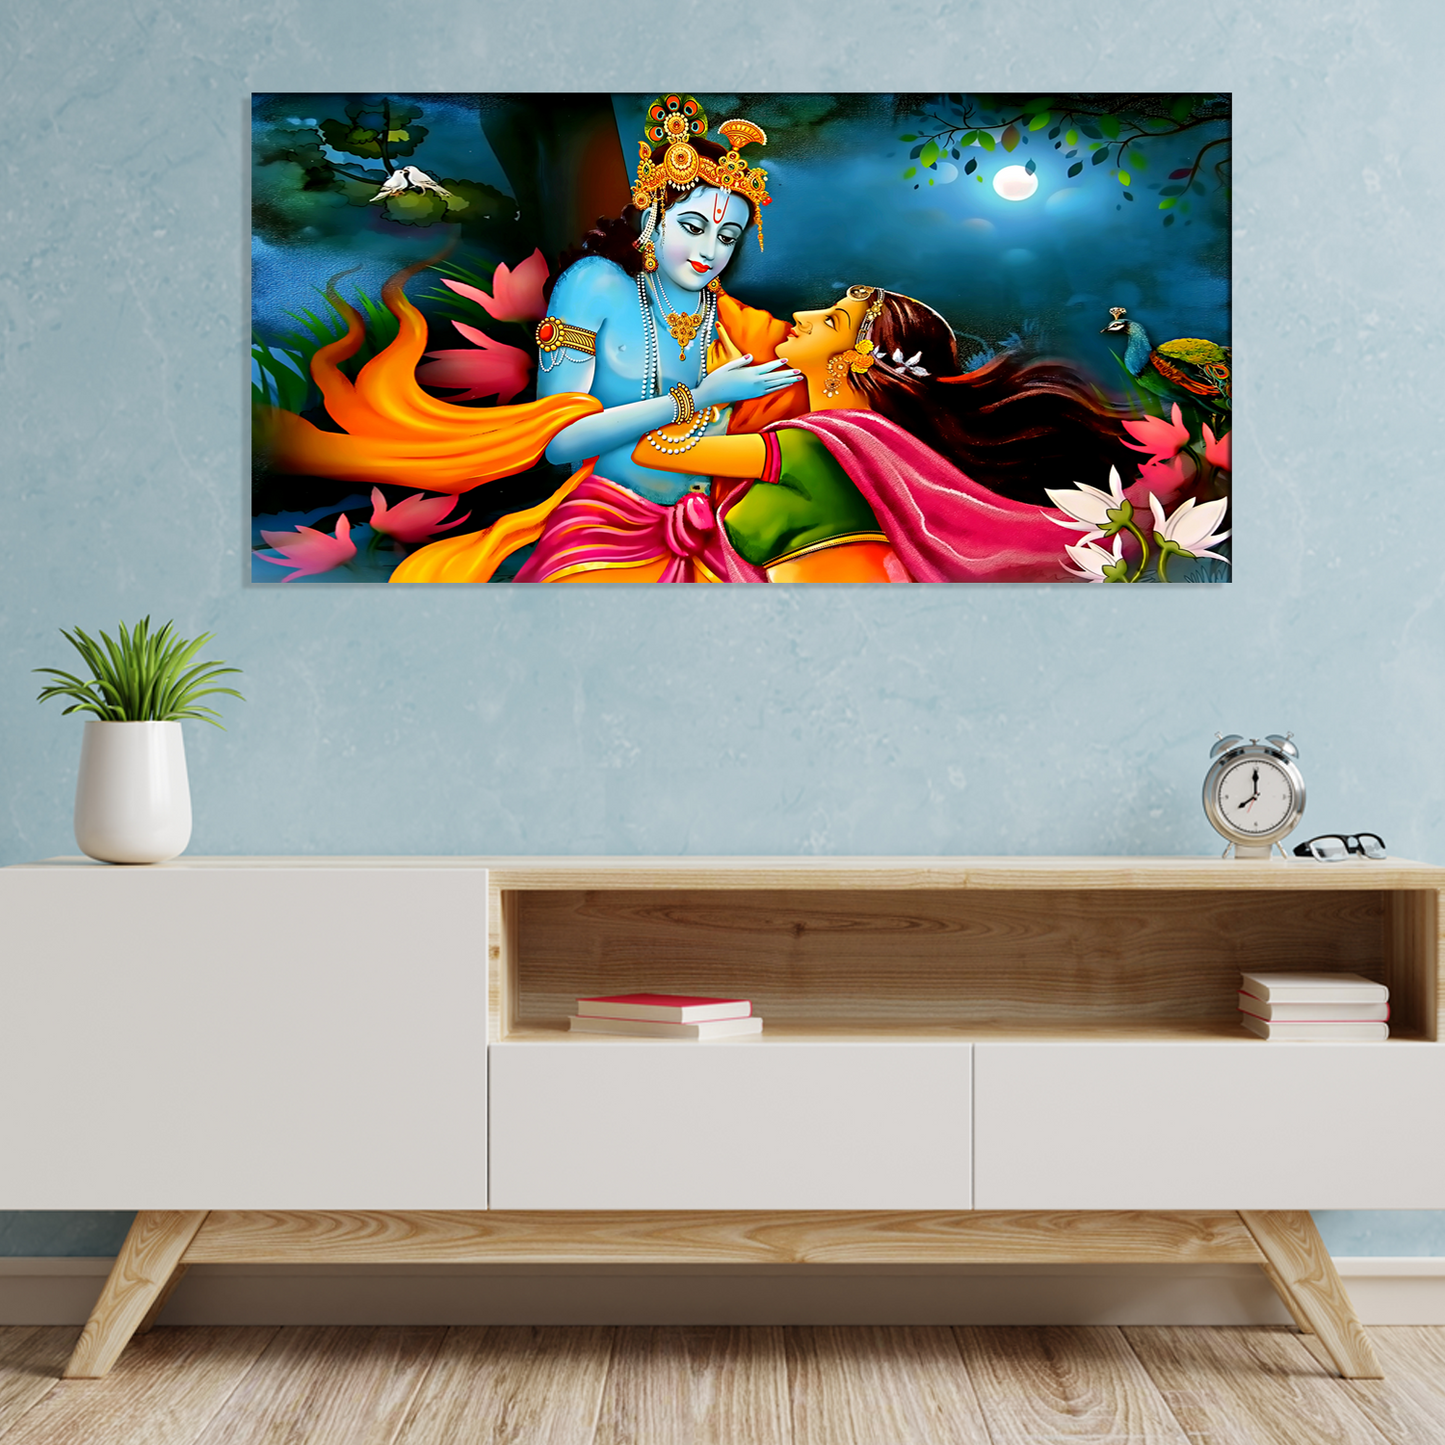 Radha krishna with Blue Tone Canvas Print Wall Painting